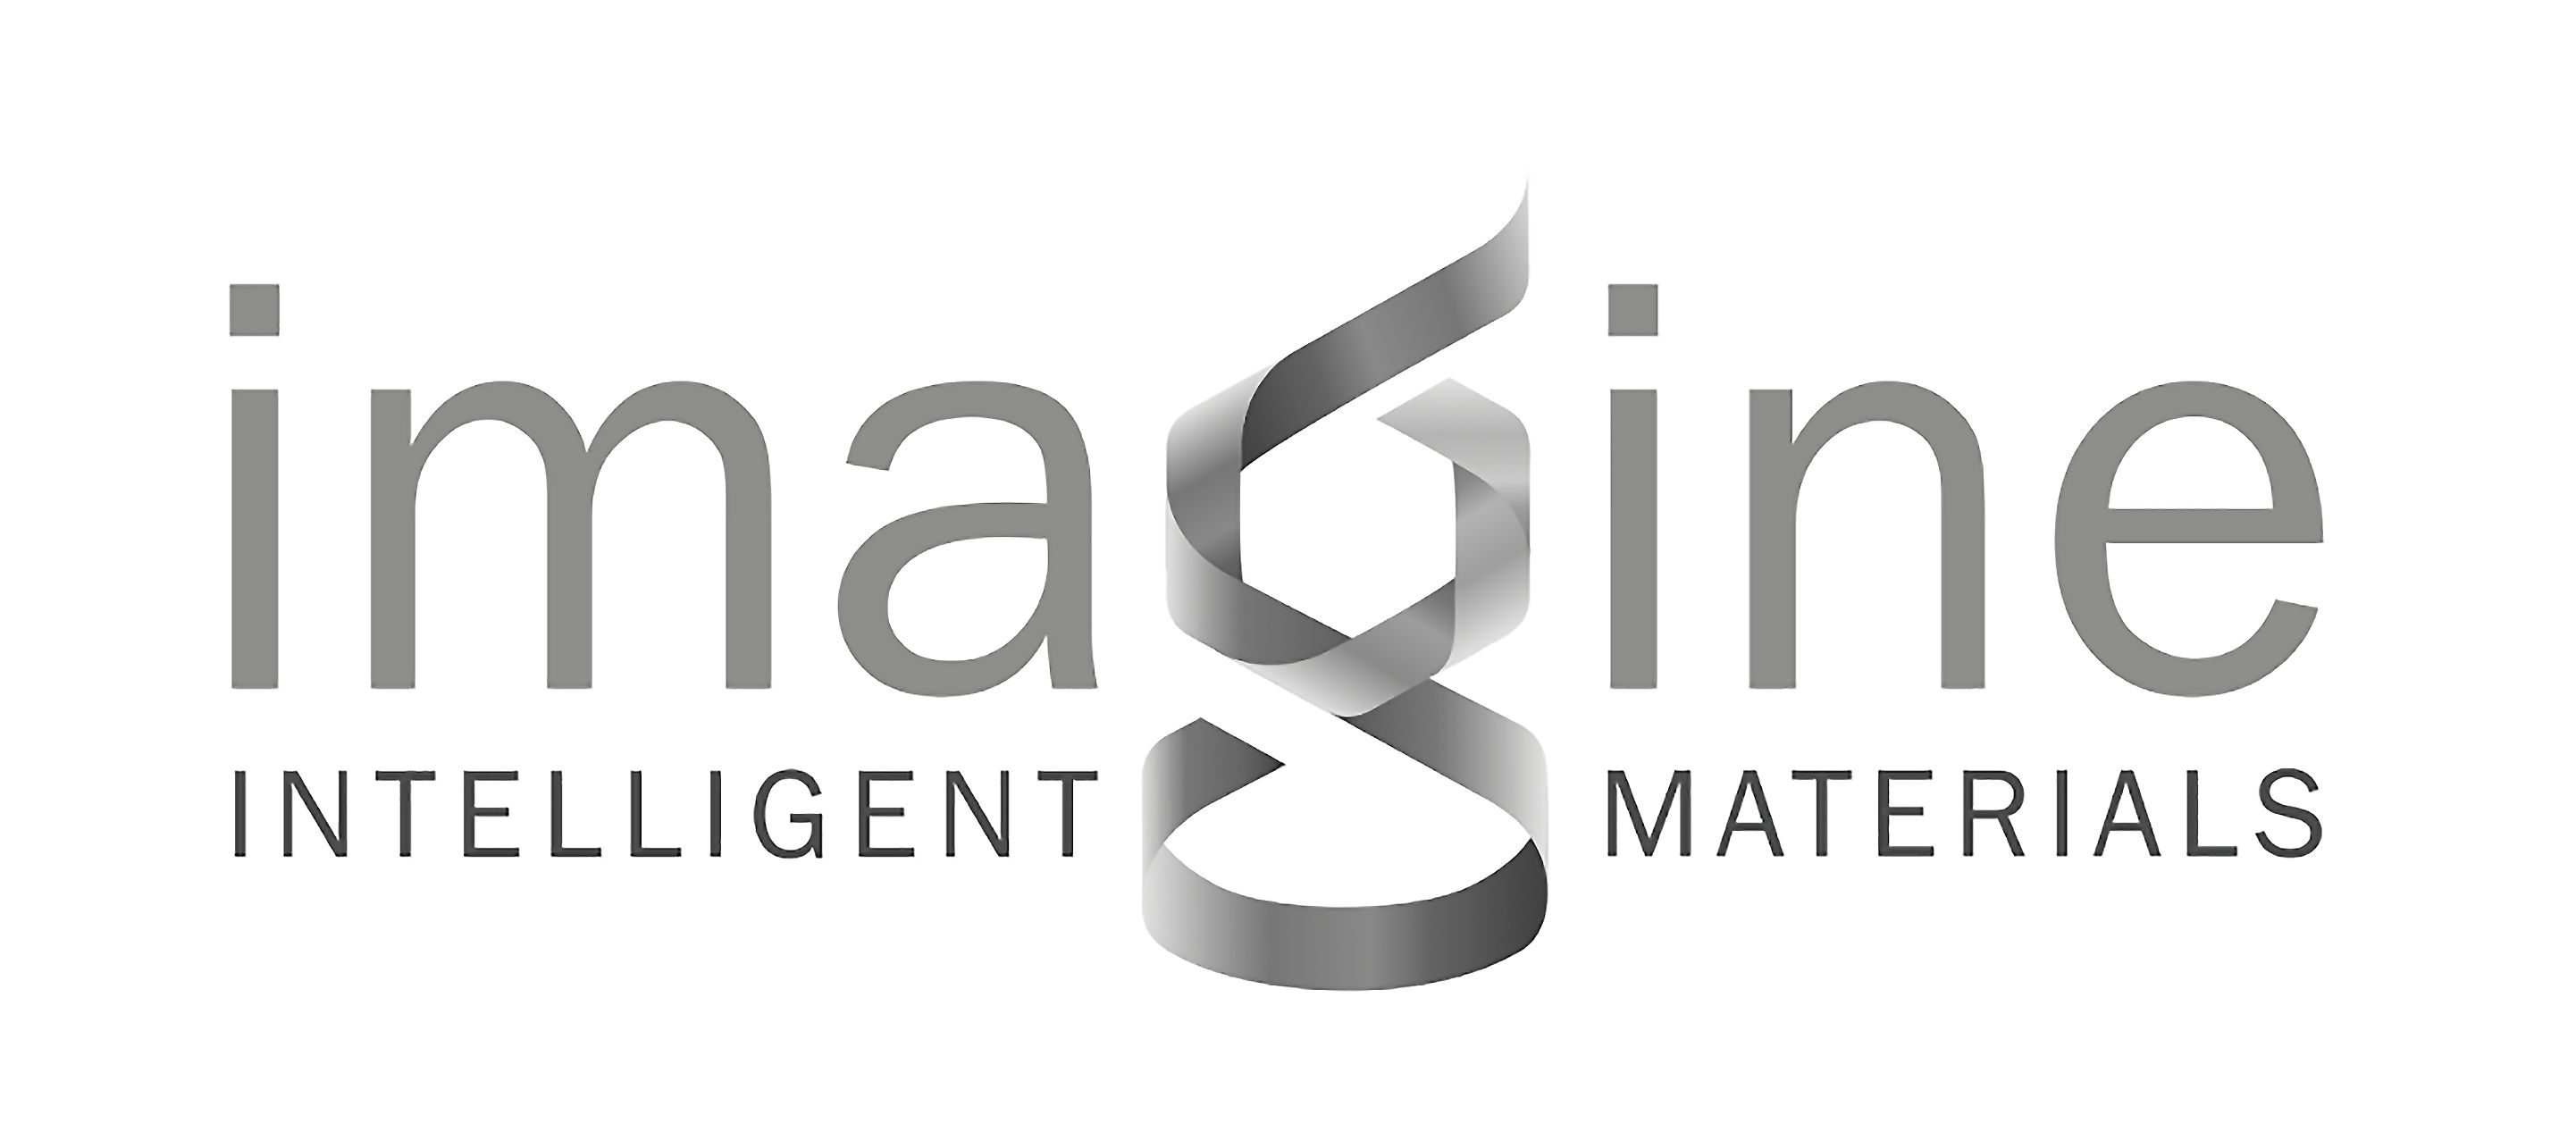 CDI-Partner-Logo-Imagine